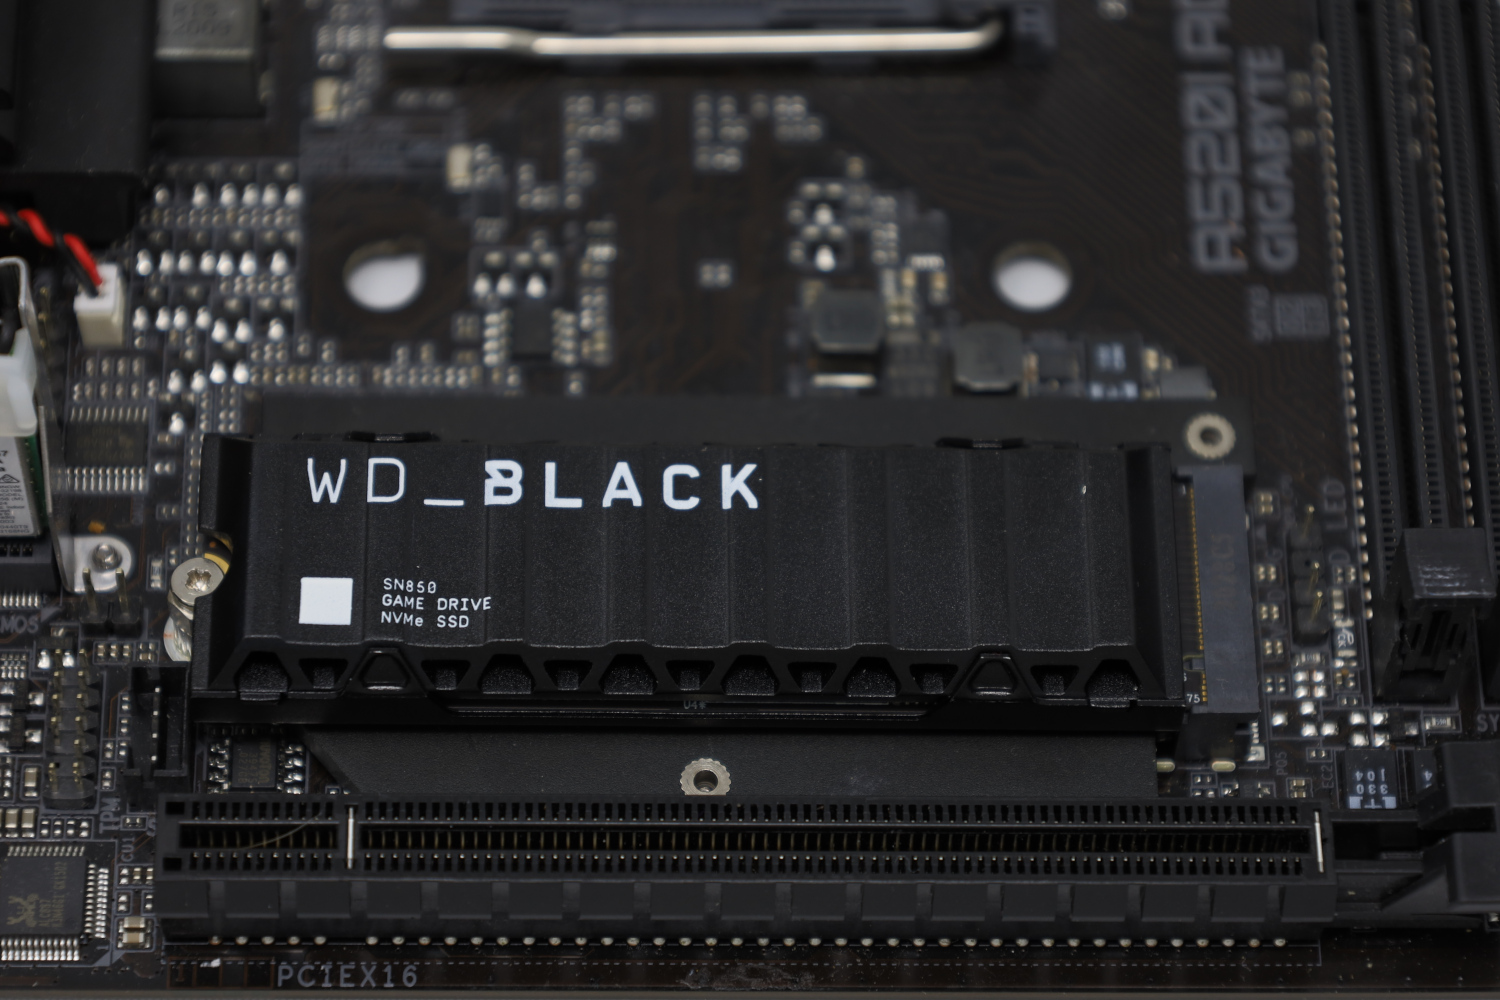 Test SSD Western Digital WD_Black SN850 